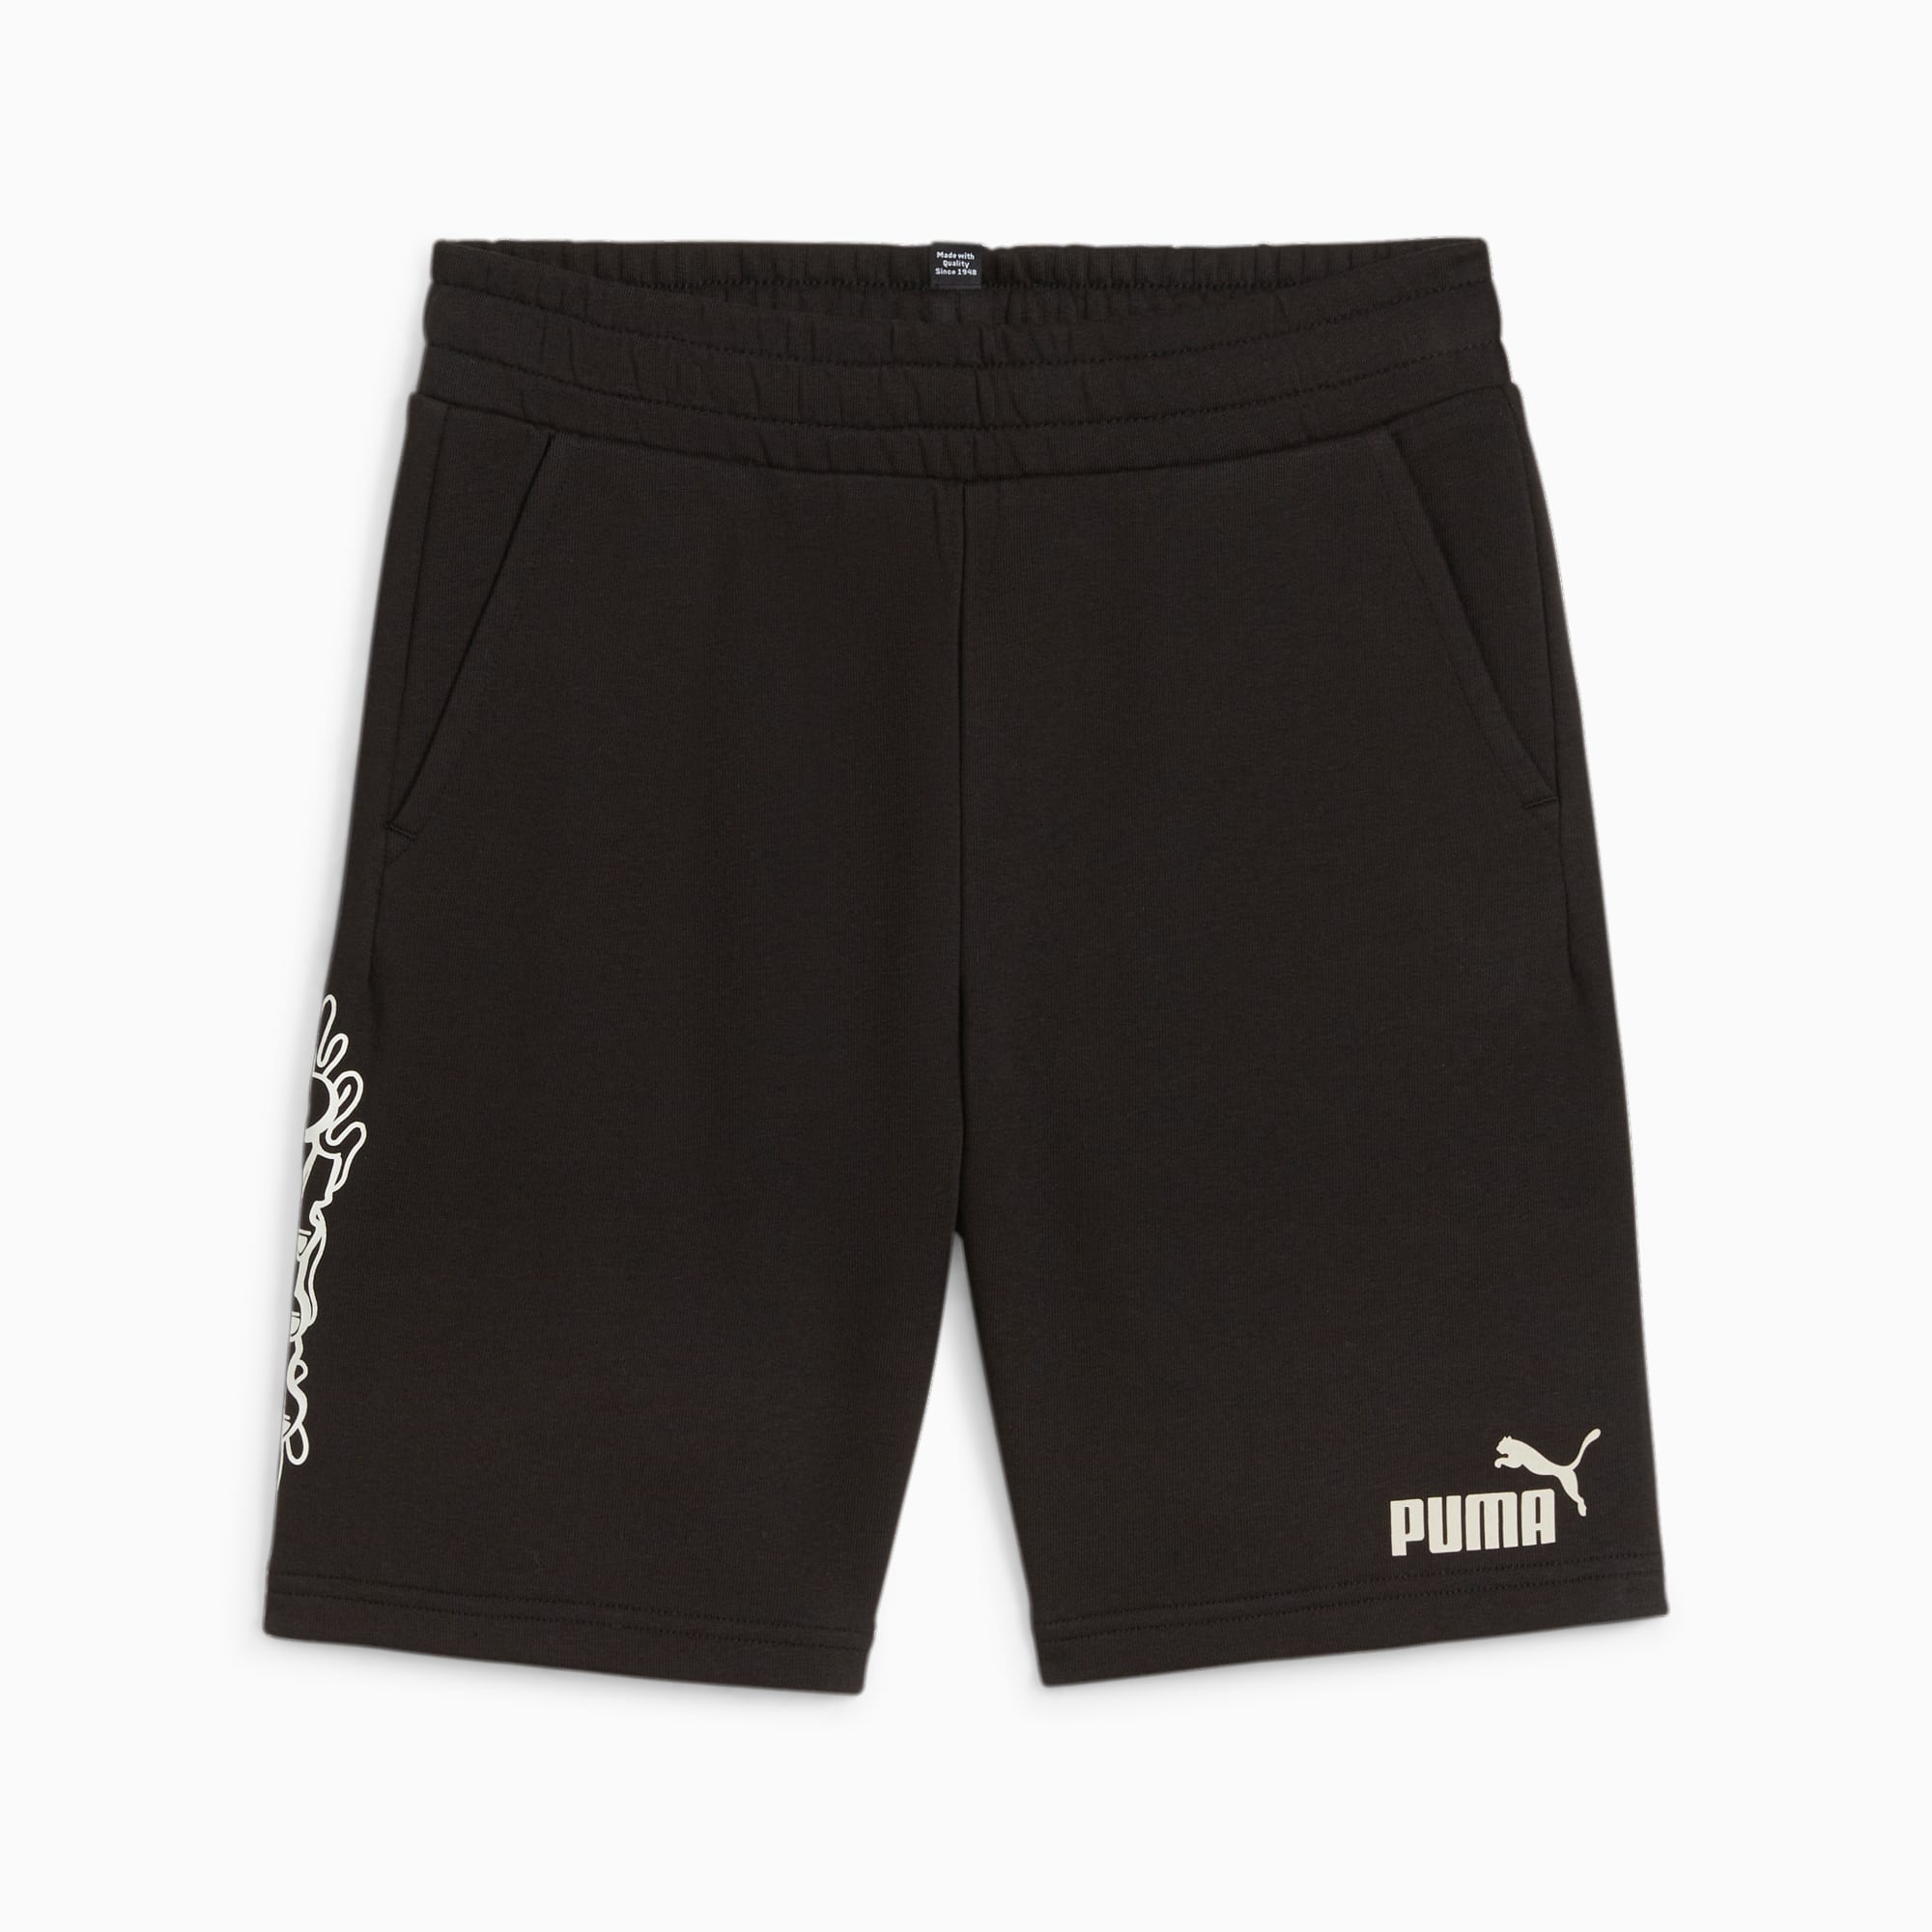 PUMA Ess+ Mid 90S Youth Shorts, Black, Size 128, Clothing